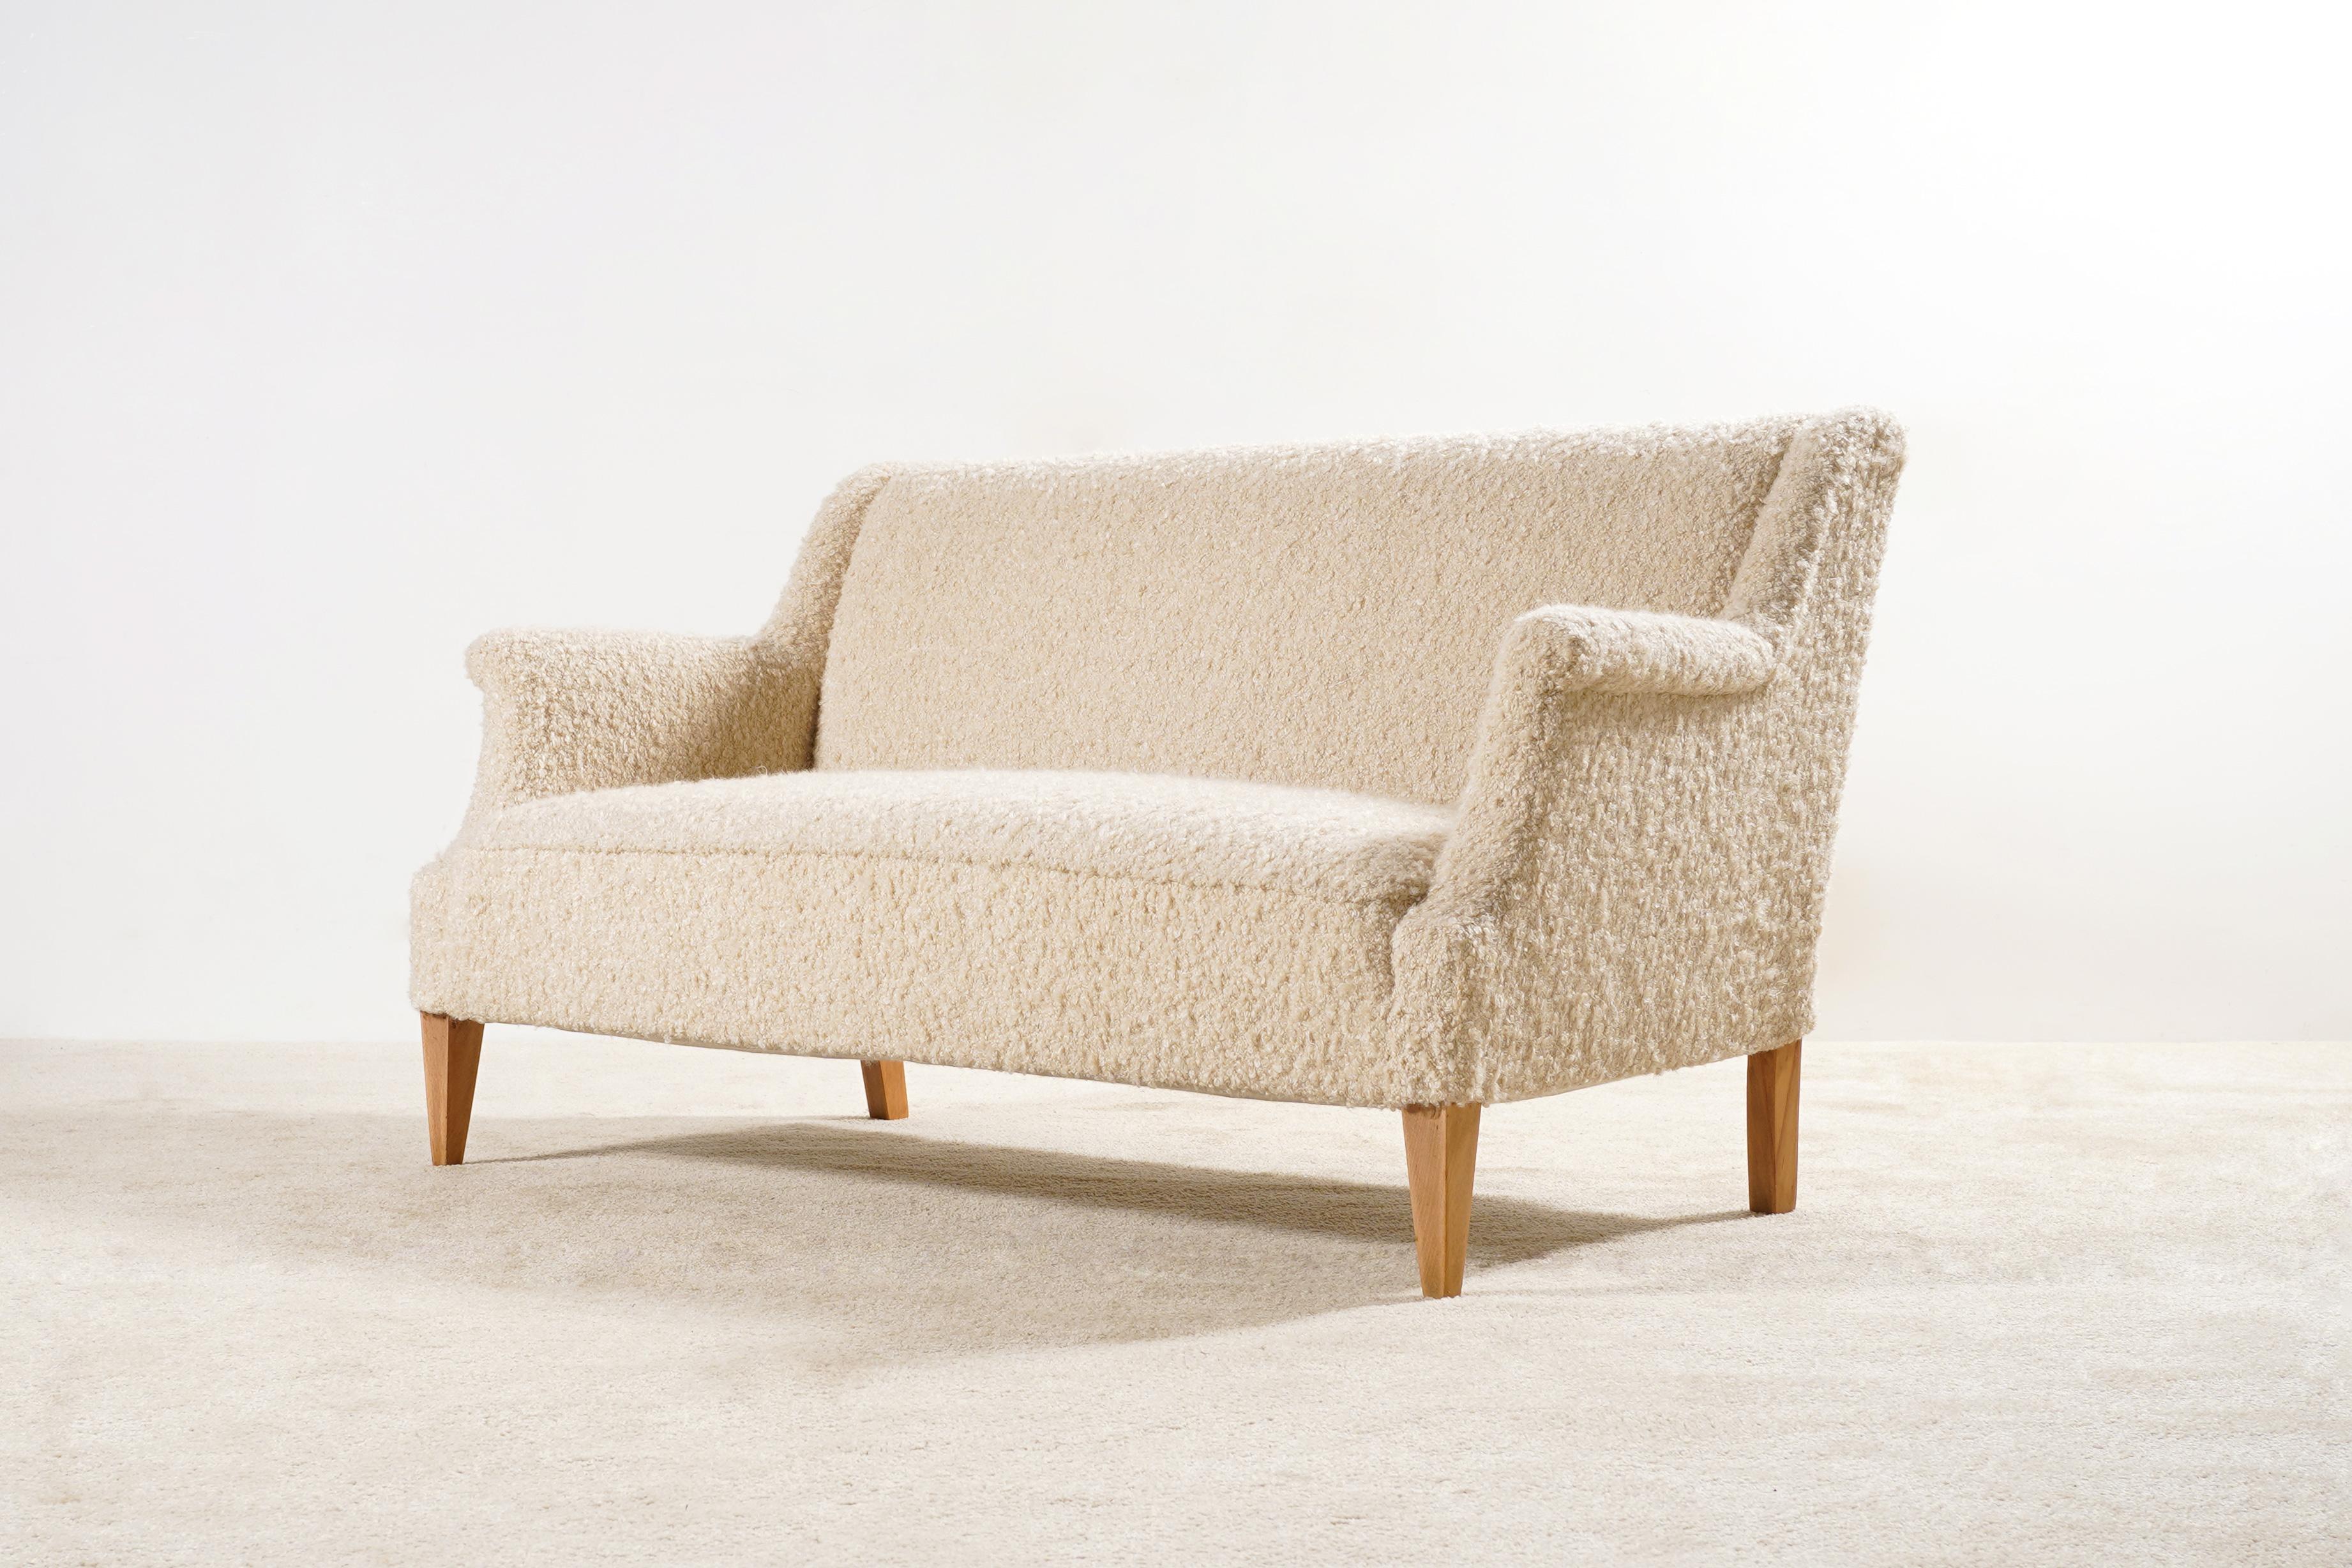 Scandinavian Modern Two-Seat Danish Sofa, Original Piece from the 1940s Newly Upholstered